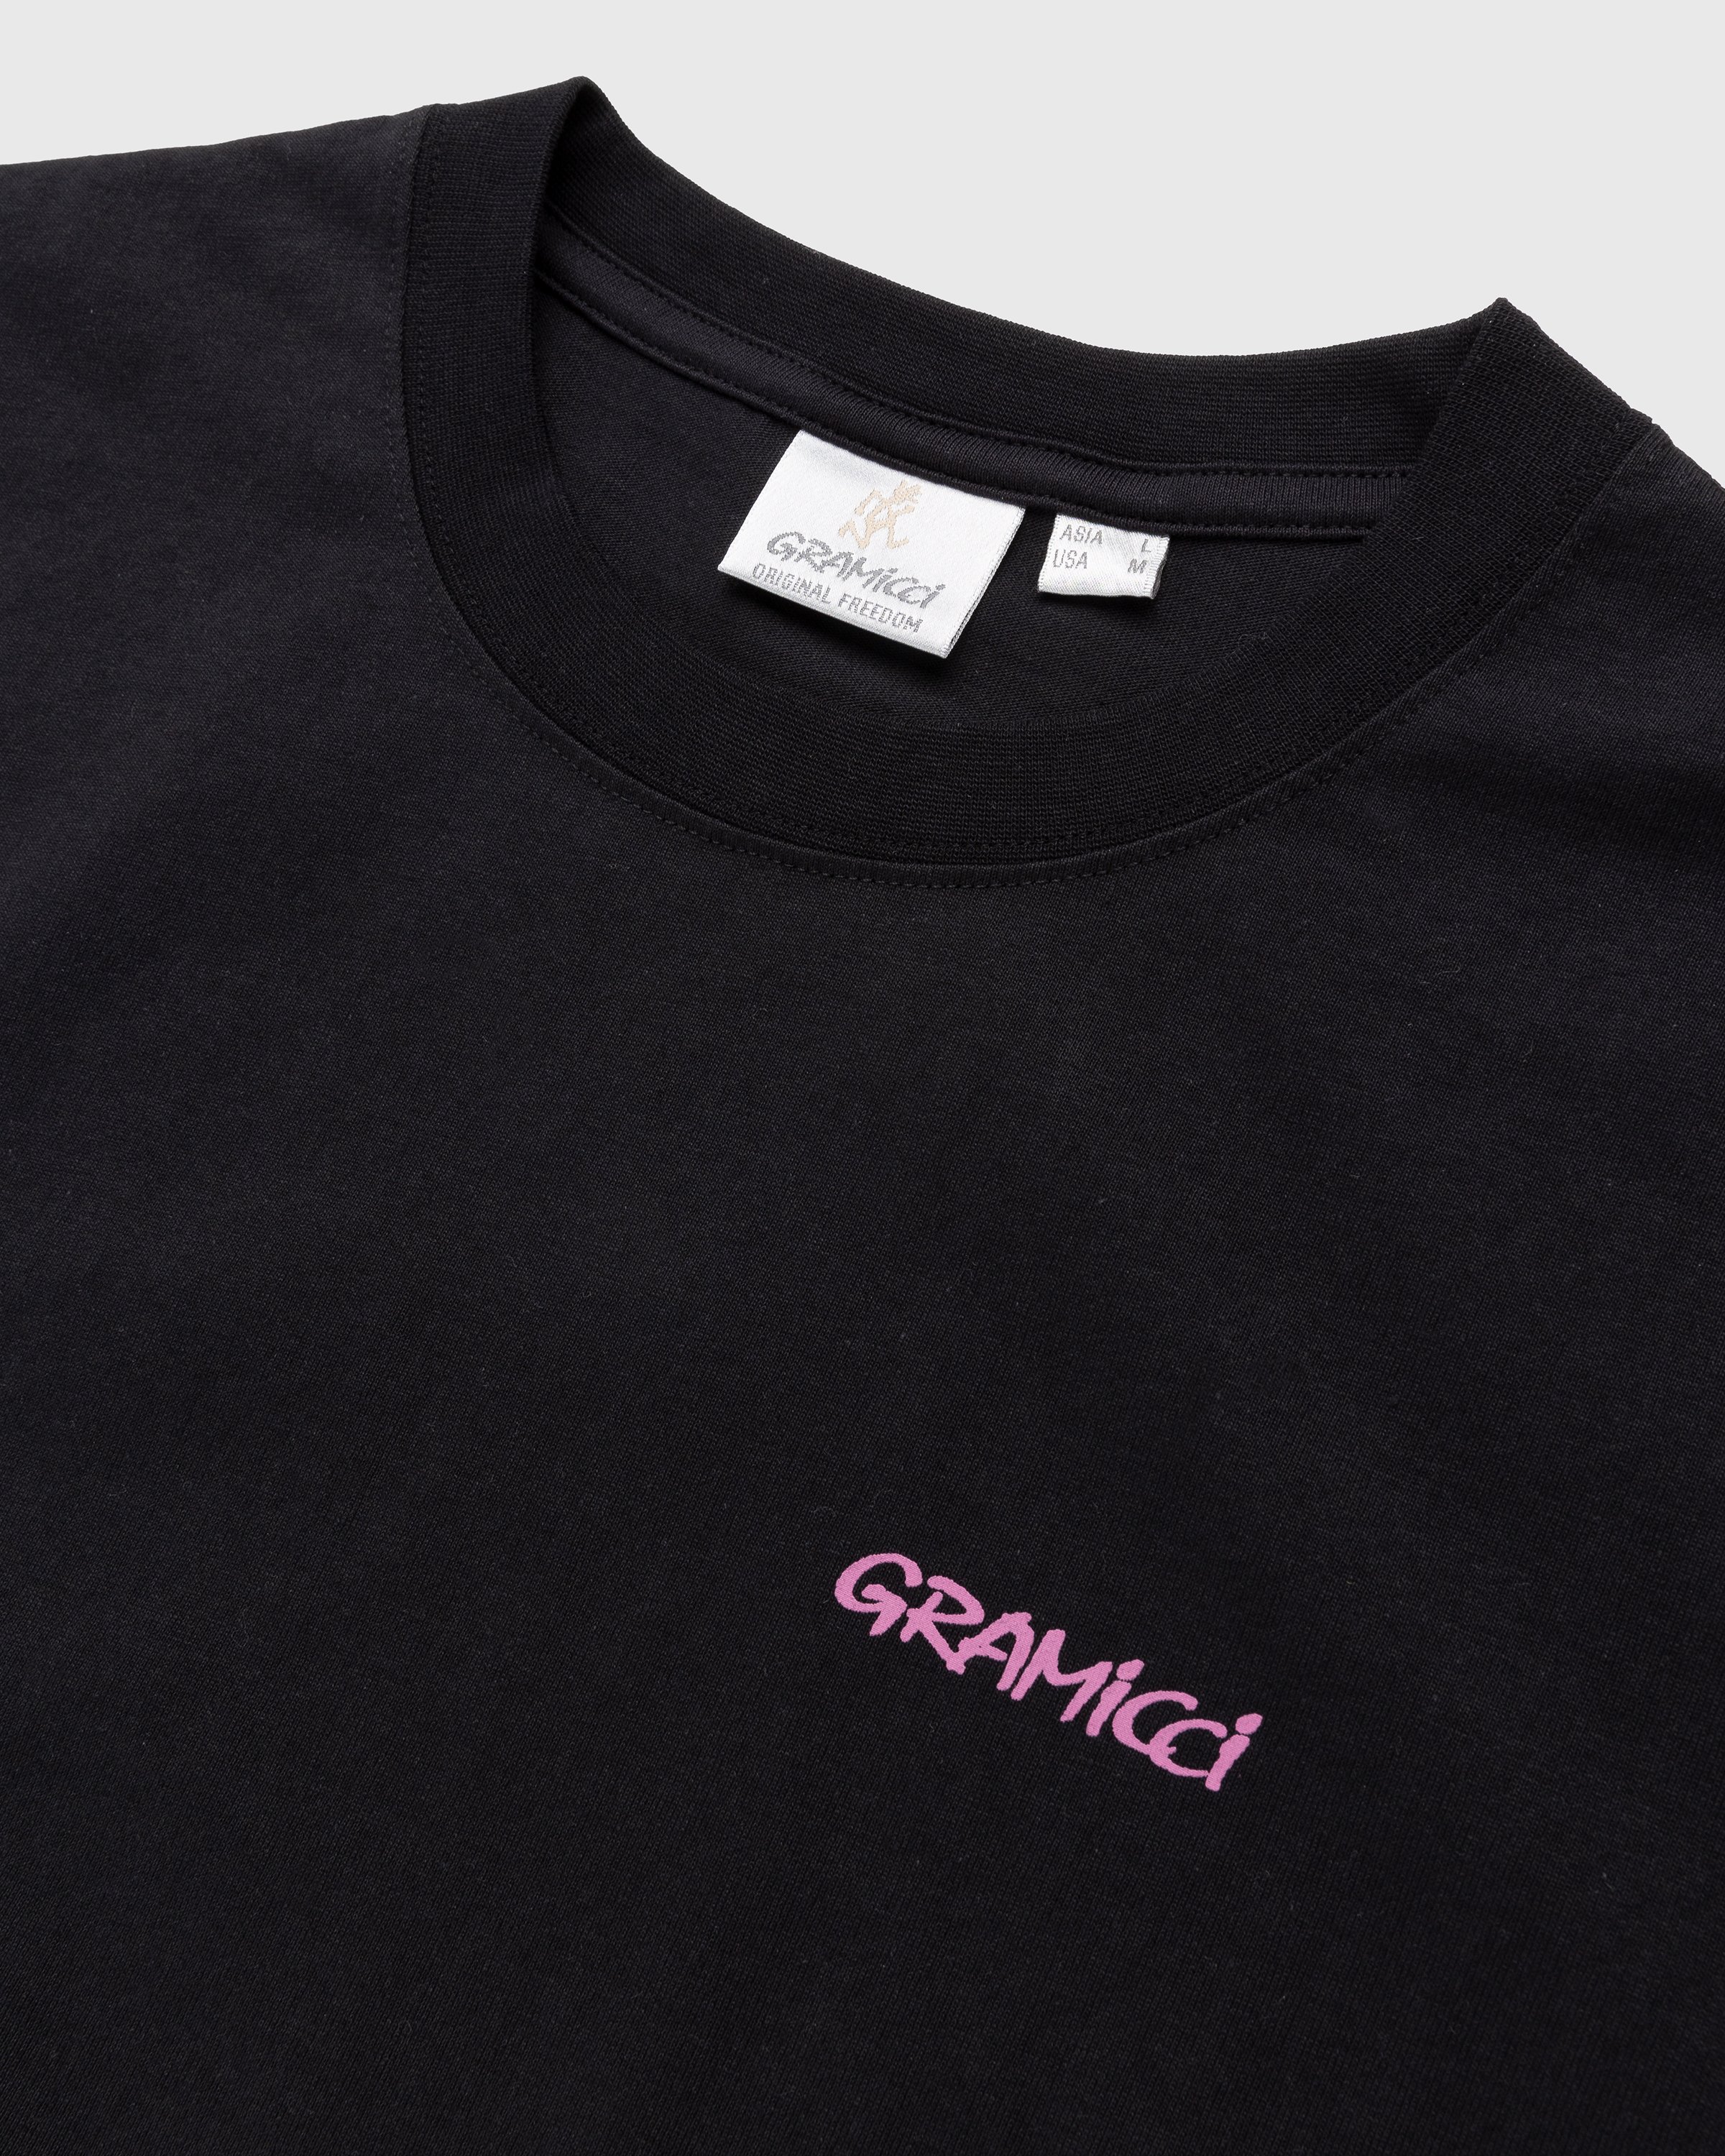 Gramicci - G Logo Tee Black - Clothing - Black - Image 4